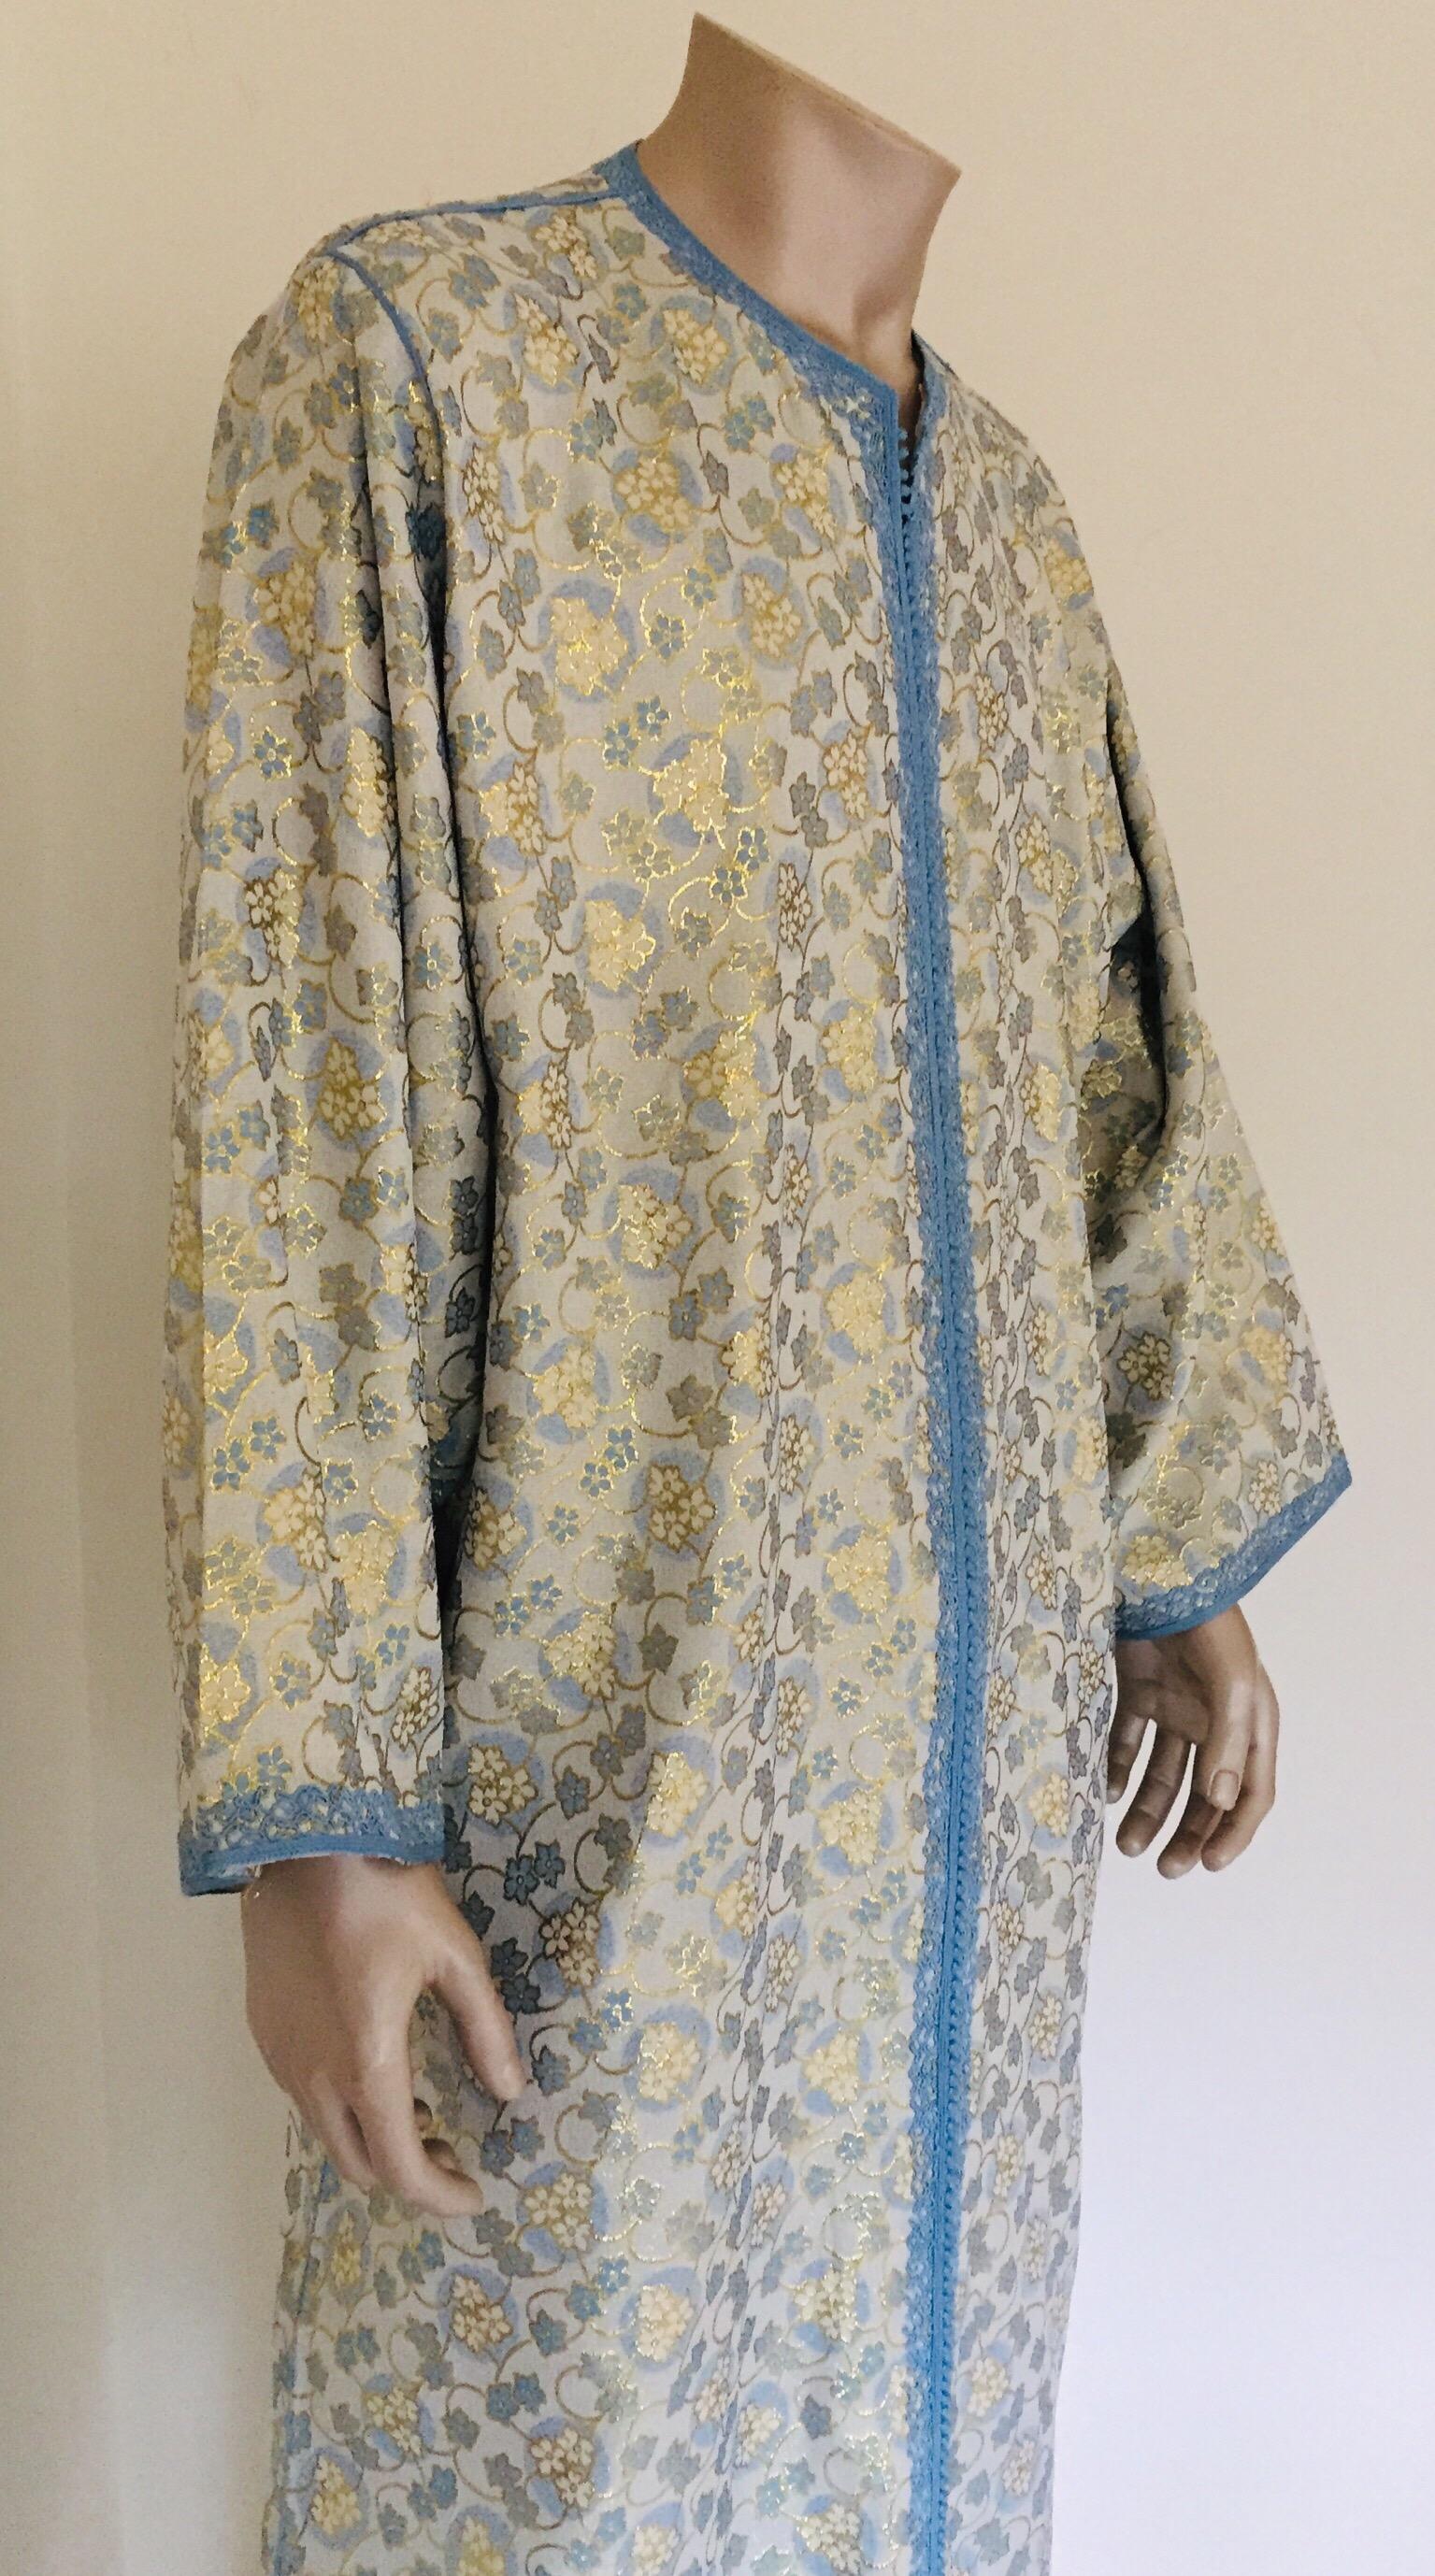 Metallic Blue and Silver Brocade 1970s Maxi Dress Caftan, Evening Gown Kaftan For Sale 3